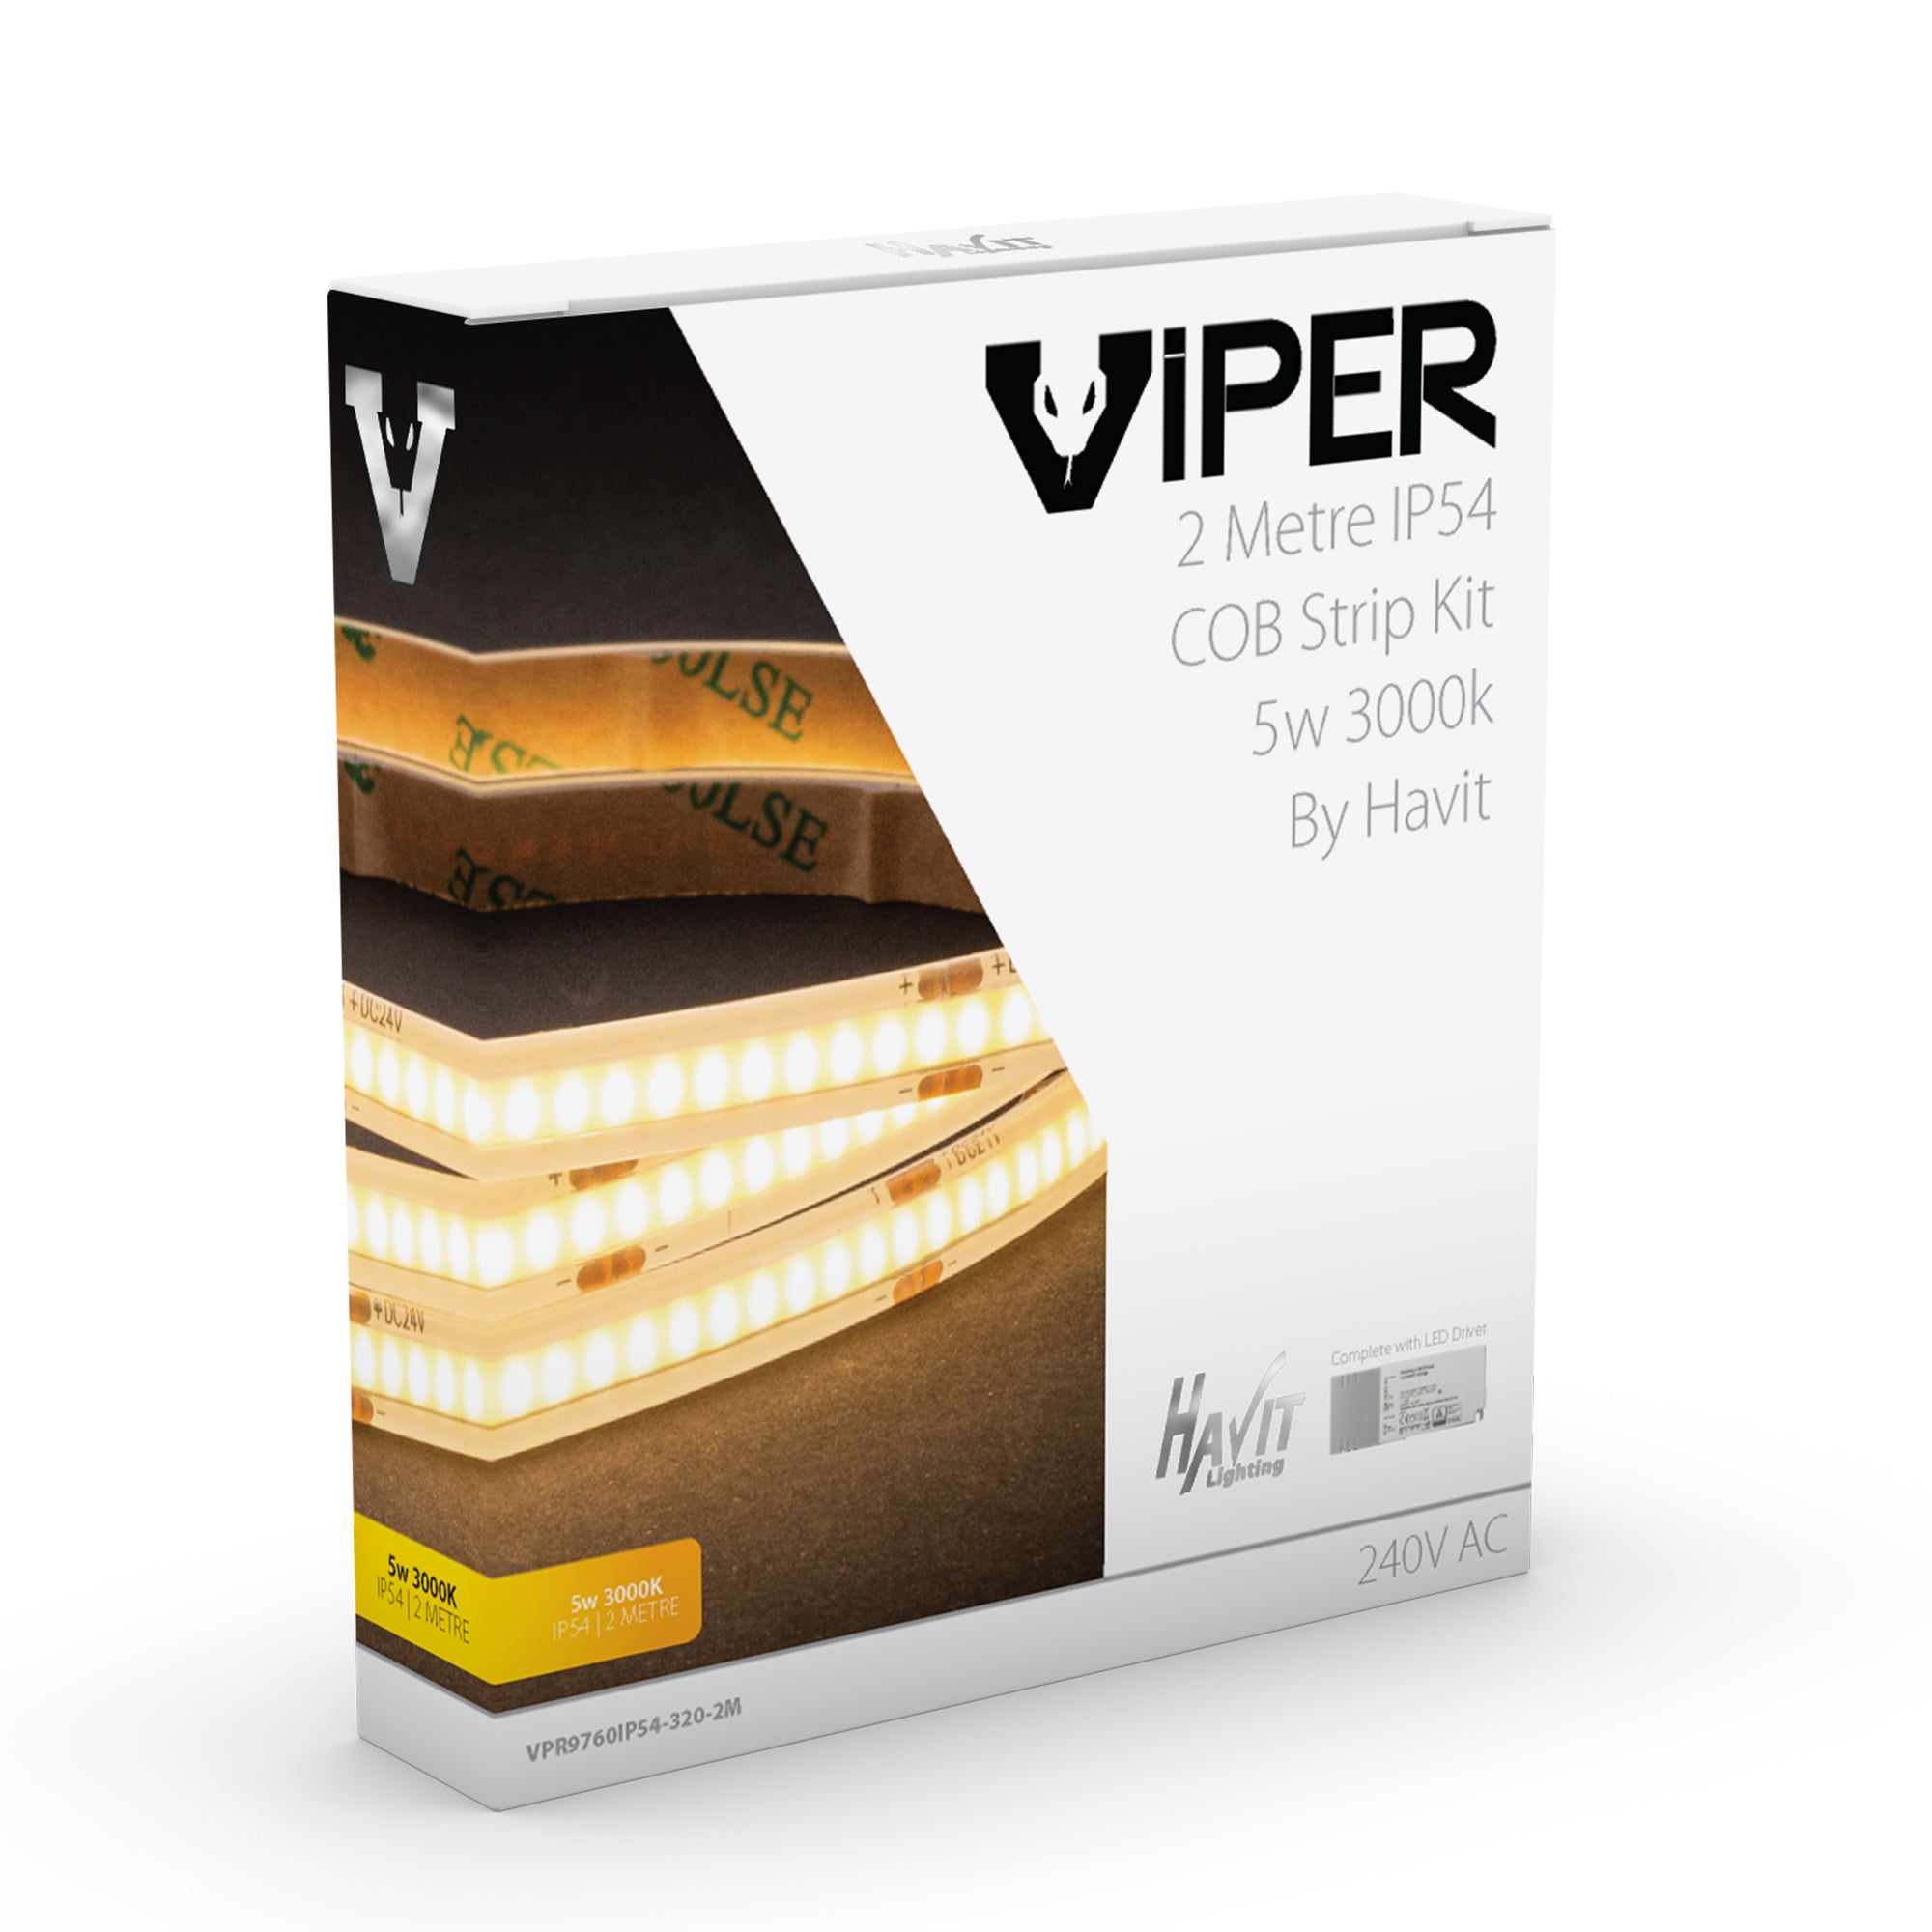 VPR9760IP54-320-2M - Viper COB 5w Per Metre 2m LED Strip kit 3000k